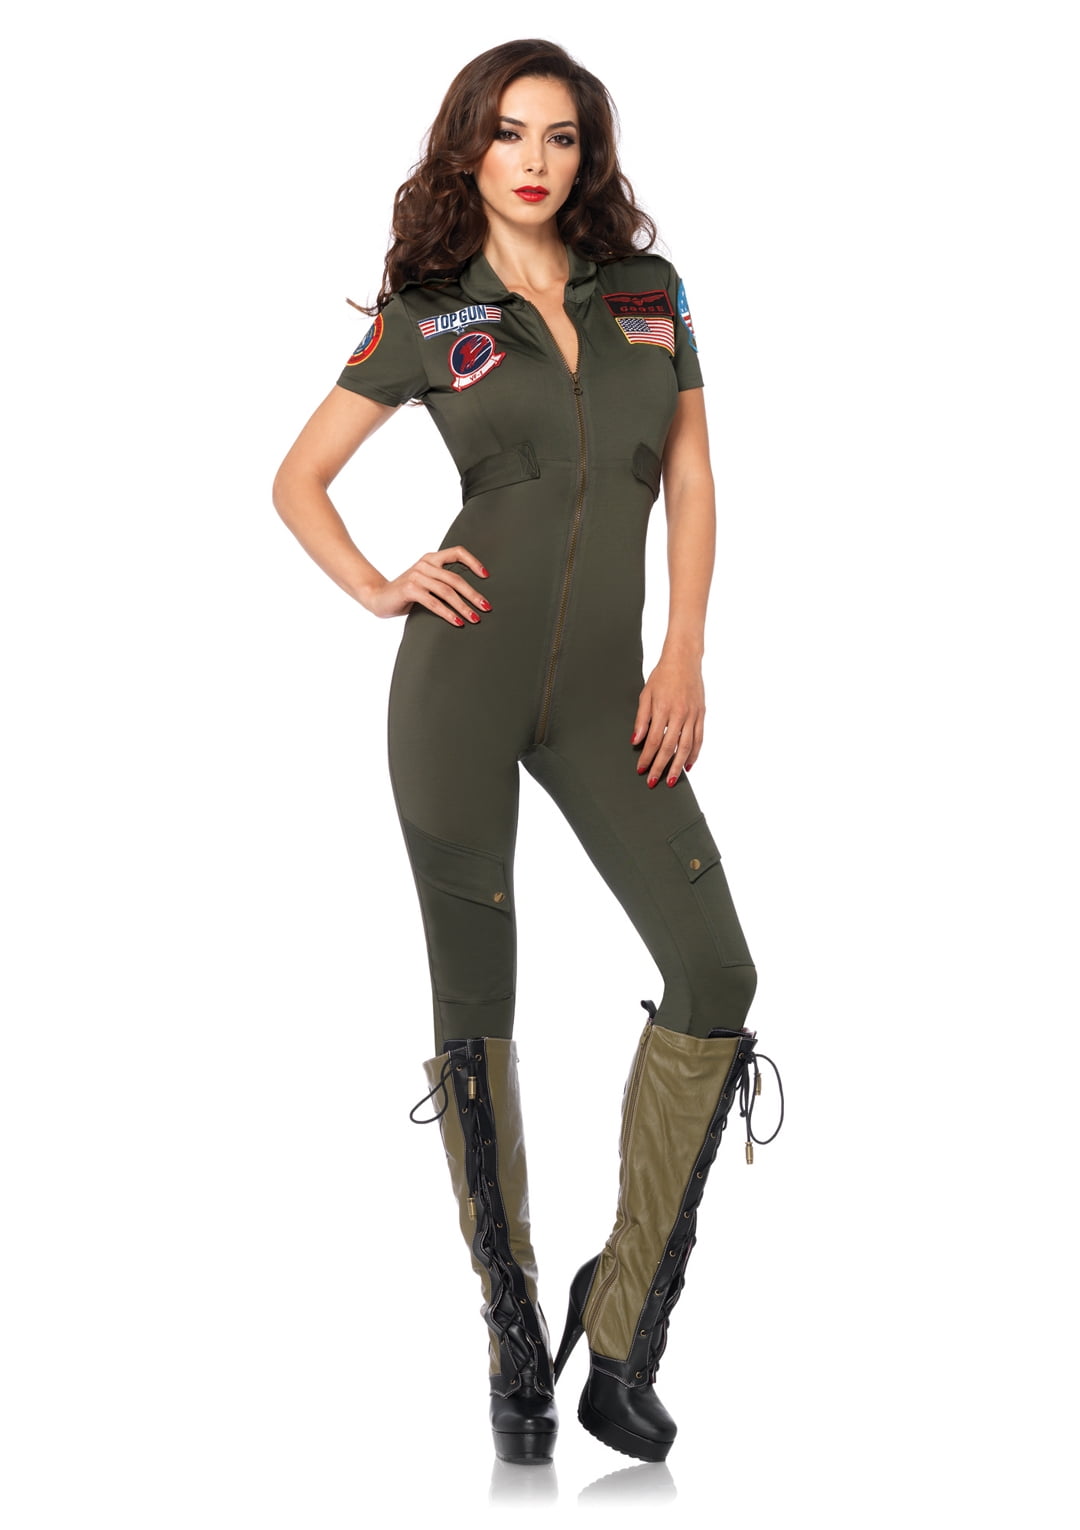 Leg Avenue Women S Sexy Top Gun Flight Catsuit Costume